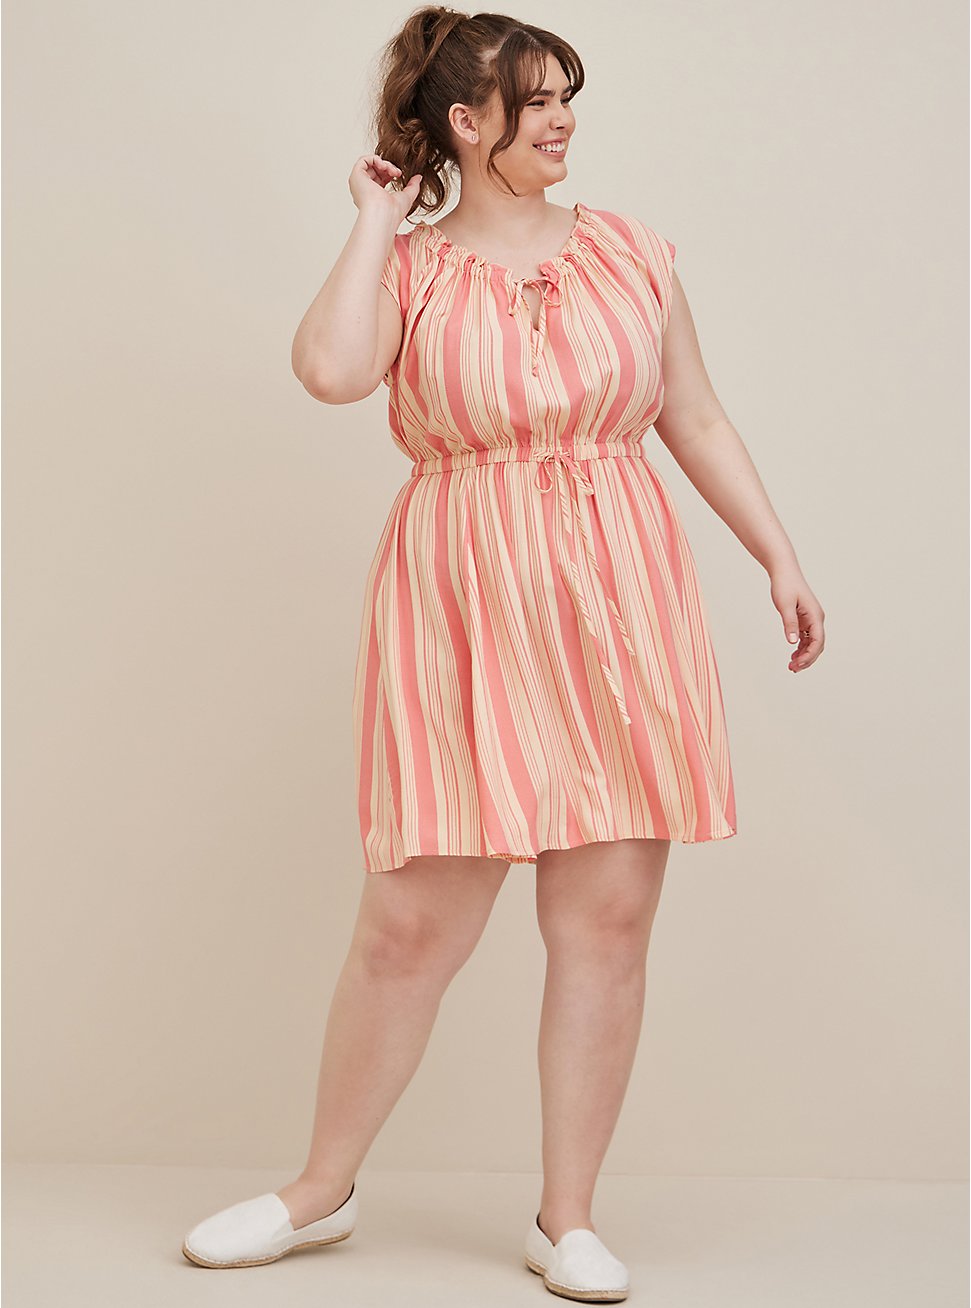 Tie Front Mini Dress - Challis Stripes Pink, STRIPE PINK, hi-res